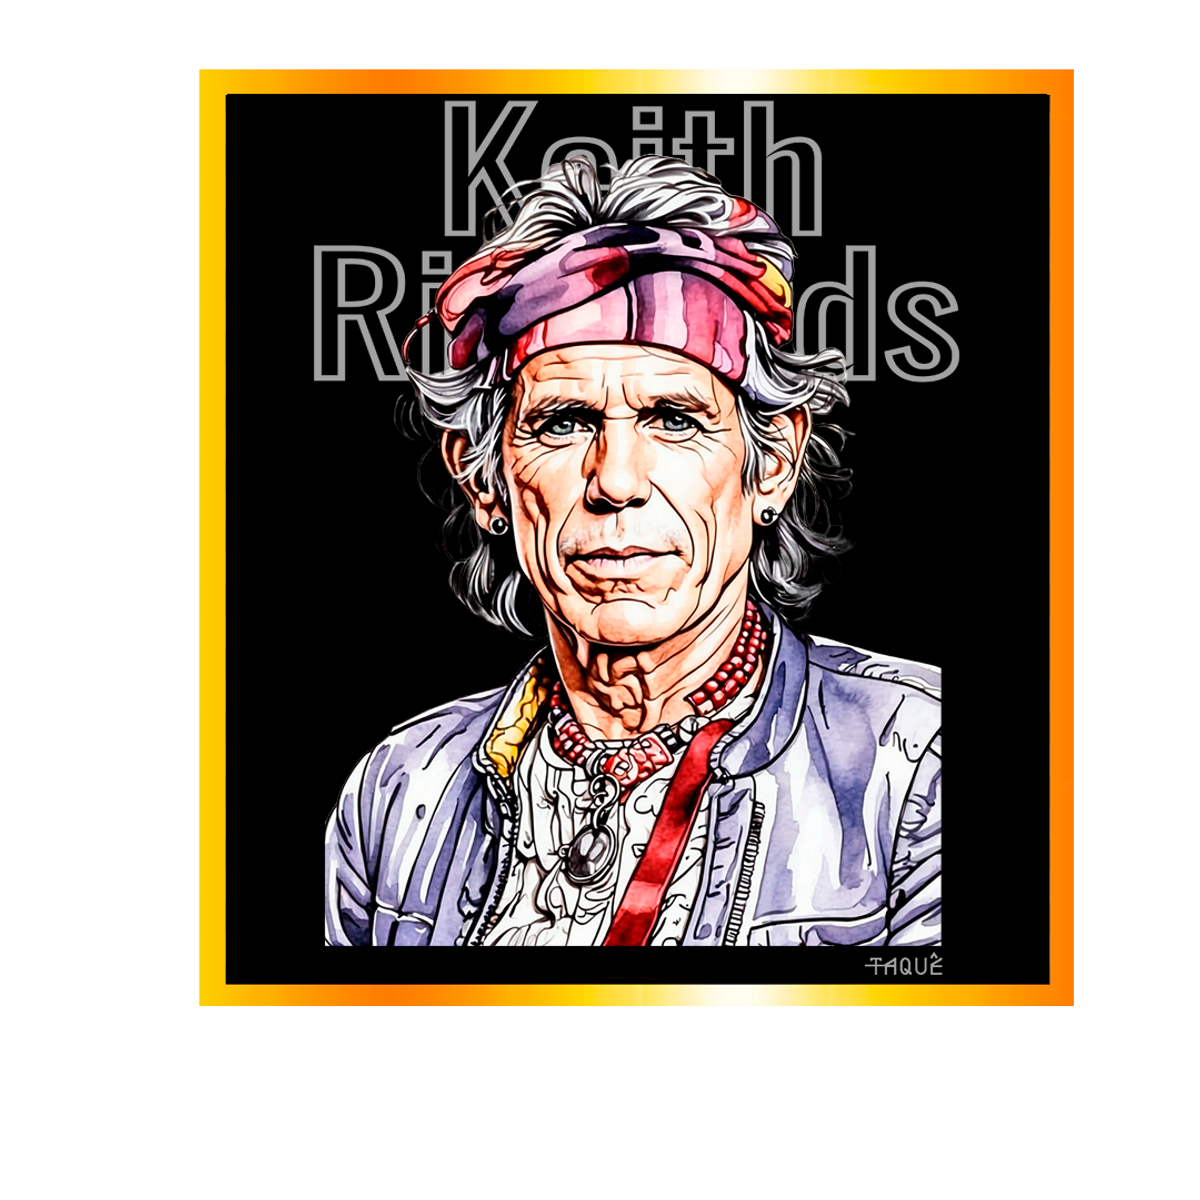 Nome do produto: Camiseta Taquê Lendas - Keith Richards